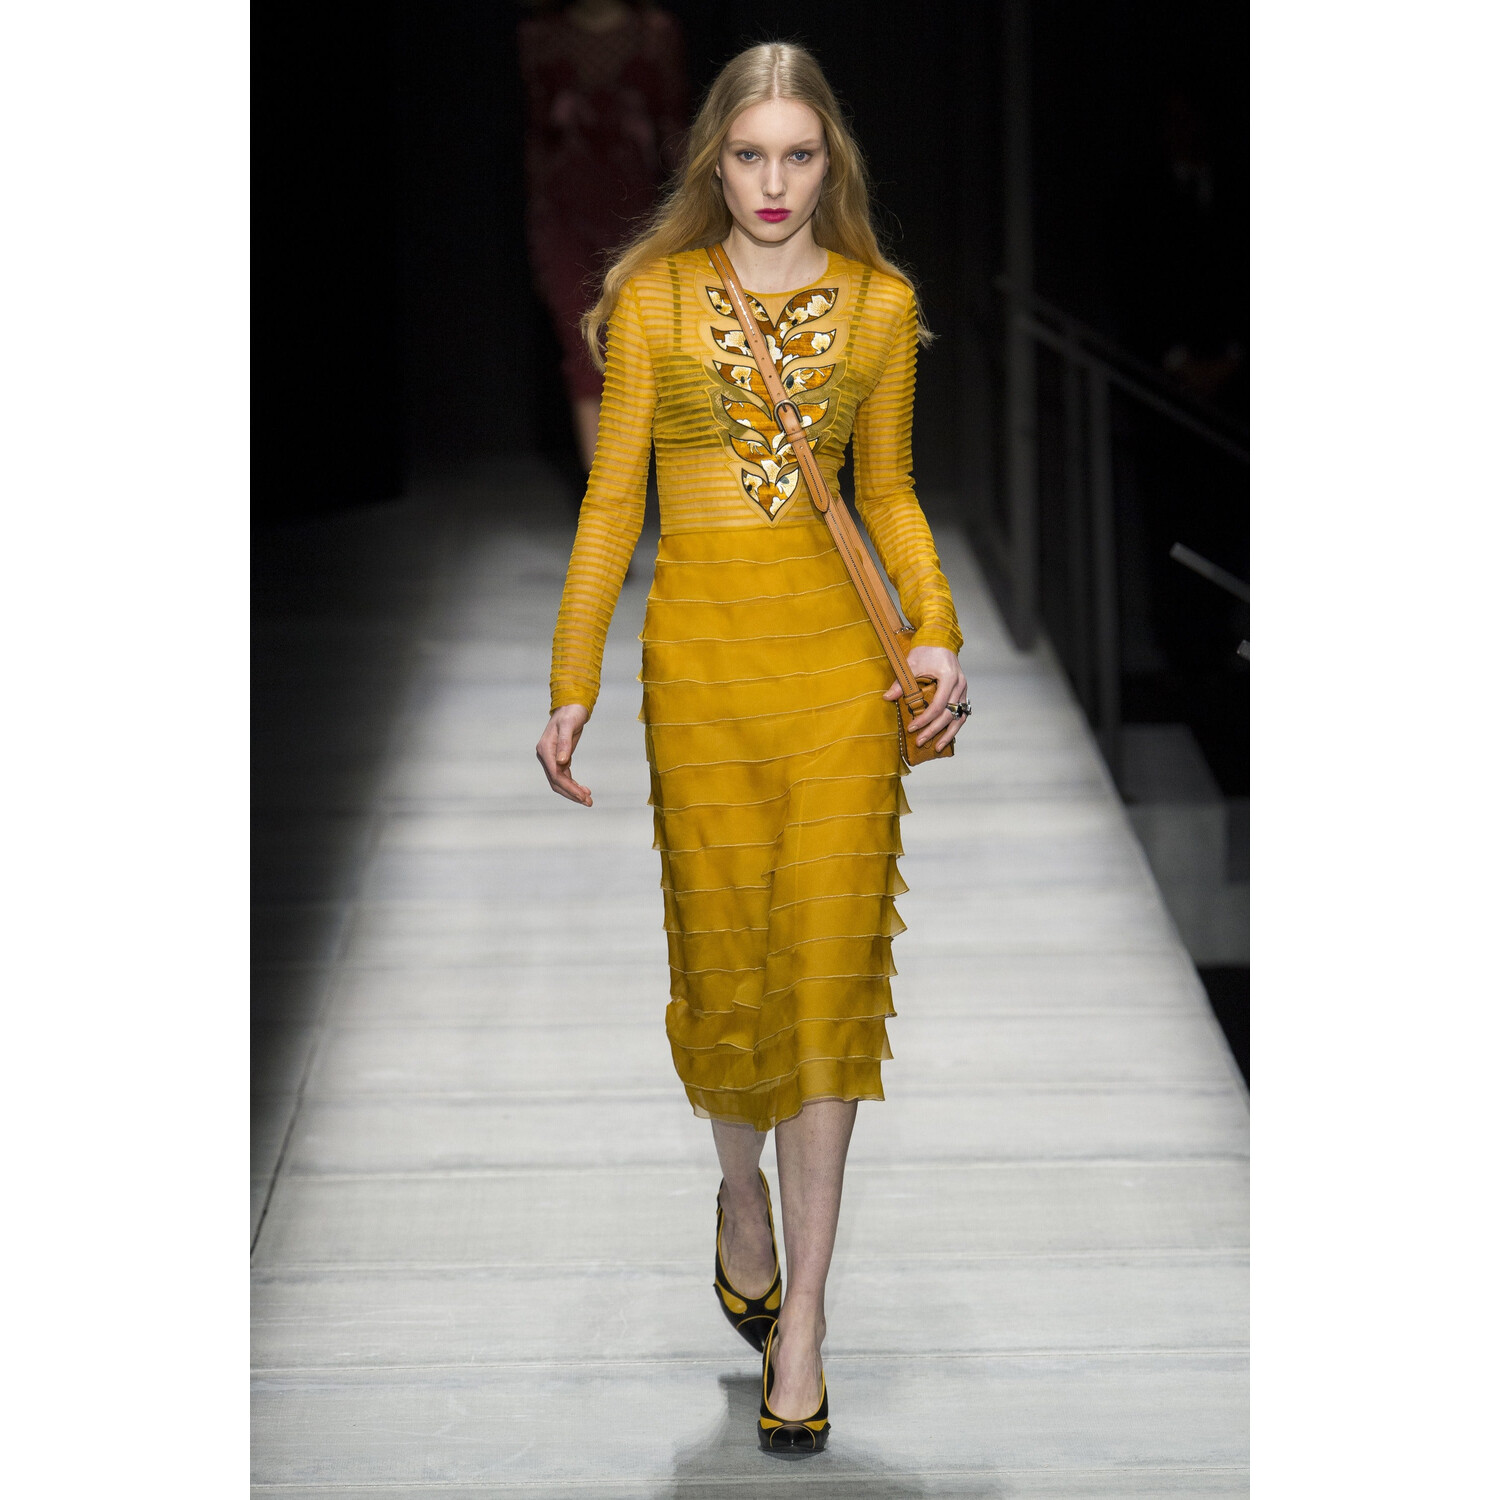 Фото Bottega Veneta Fall 2018 Ready-to-Wear Боттега Венета осень зима 2018 коллекция неделя моды в Нью Йорке Mainstyles